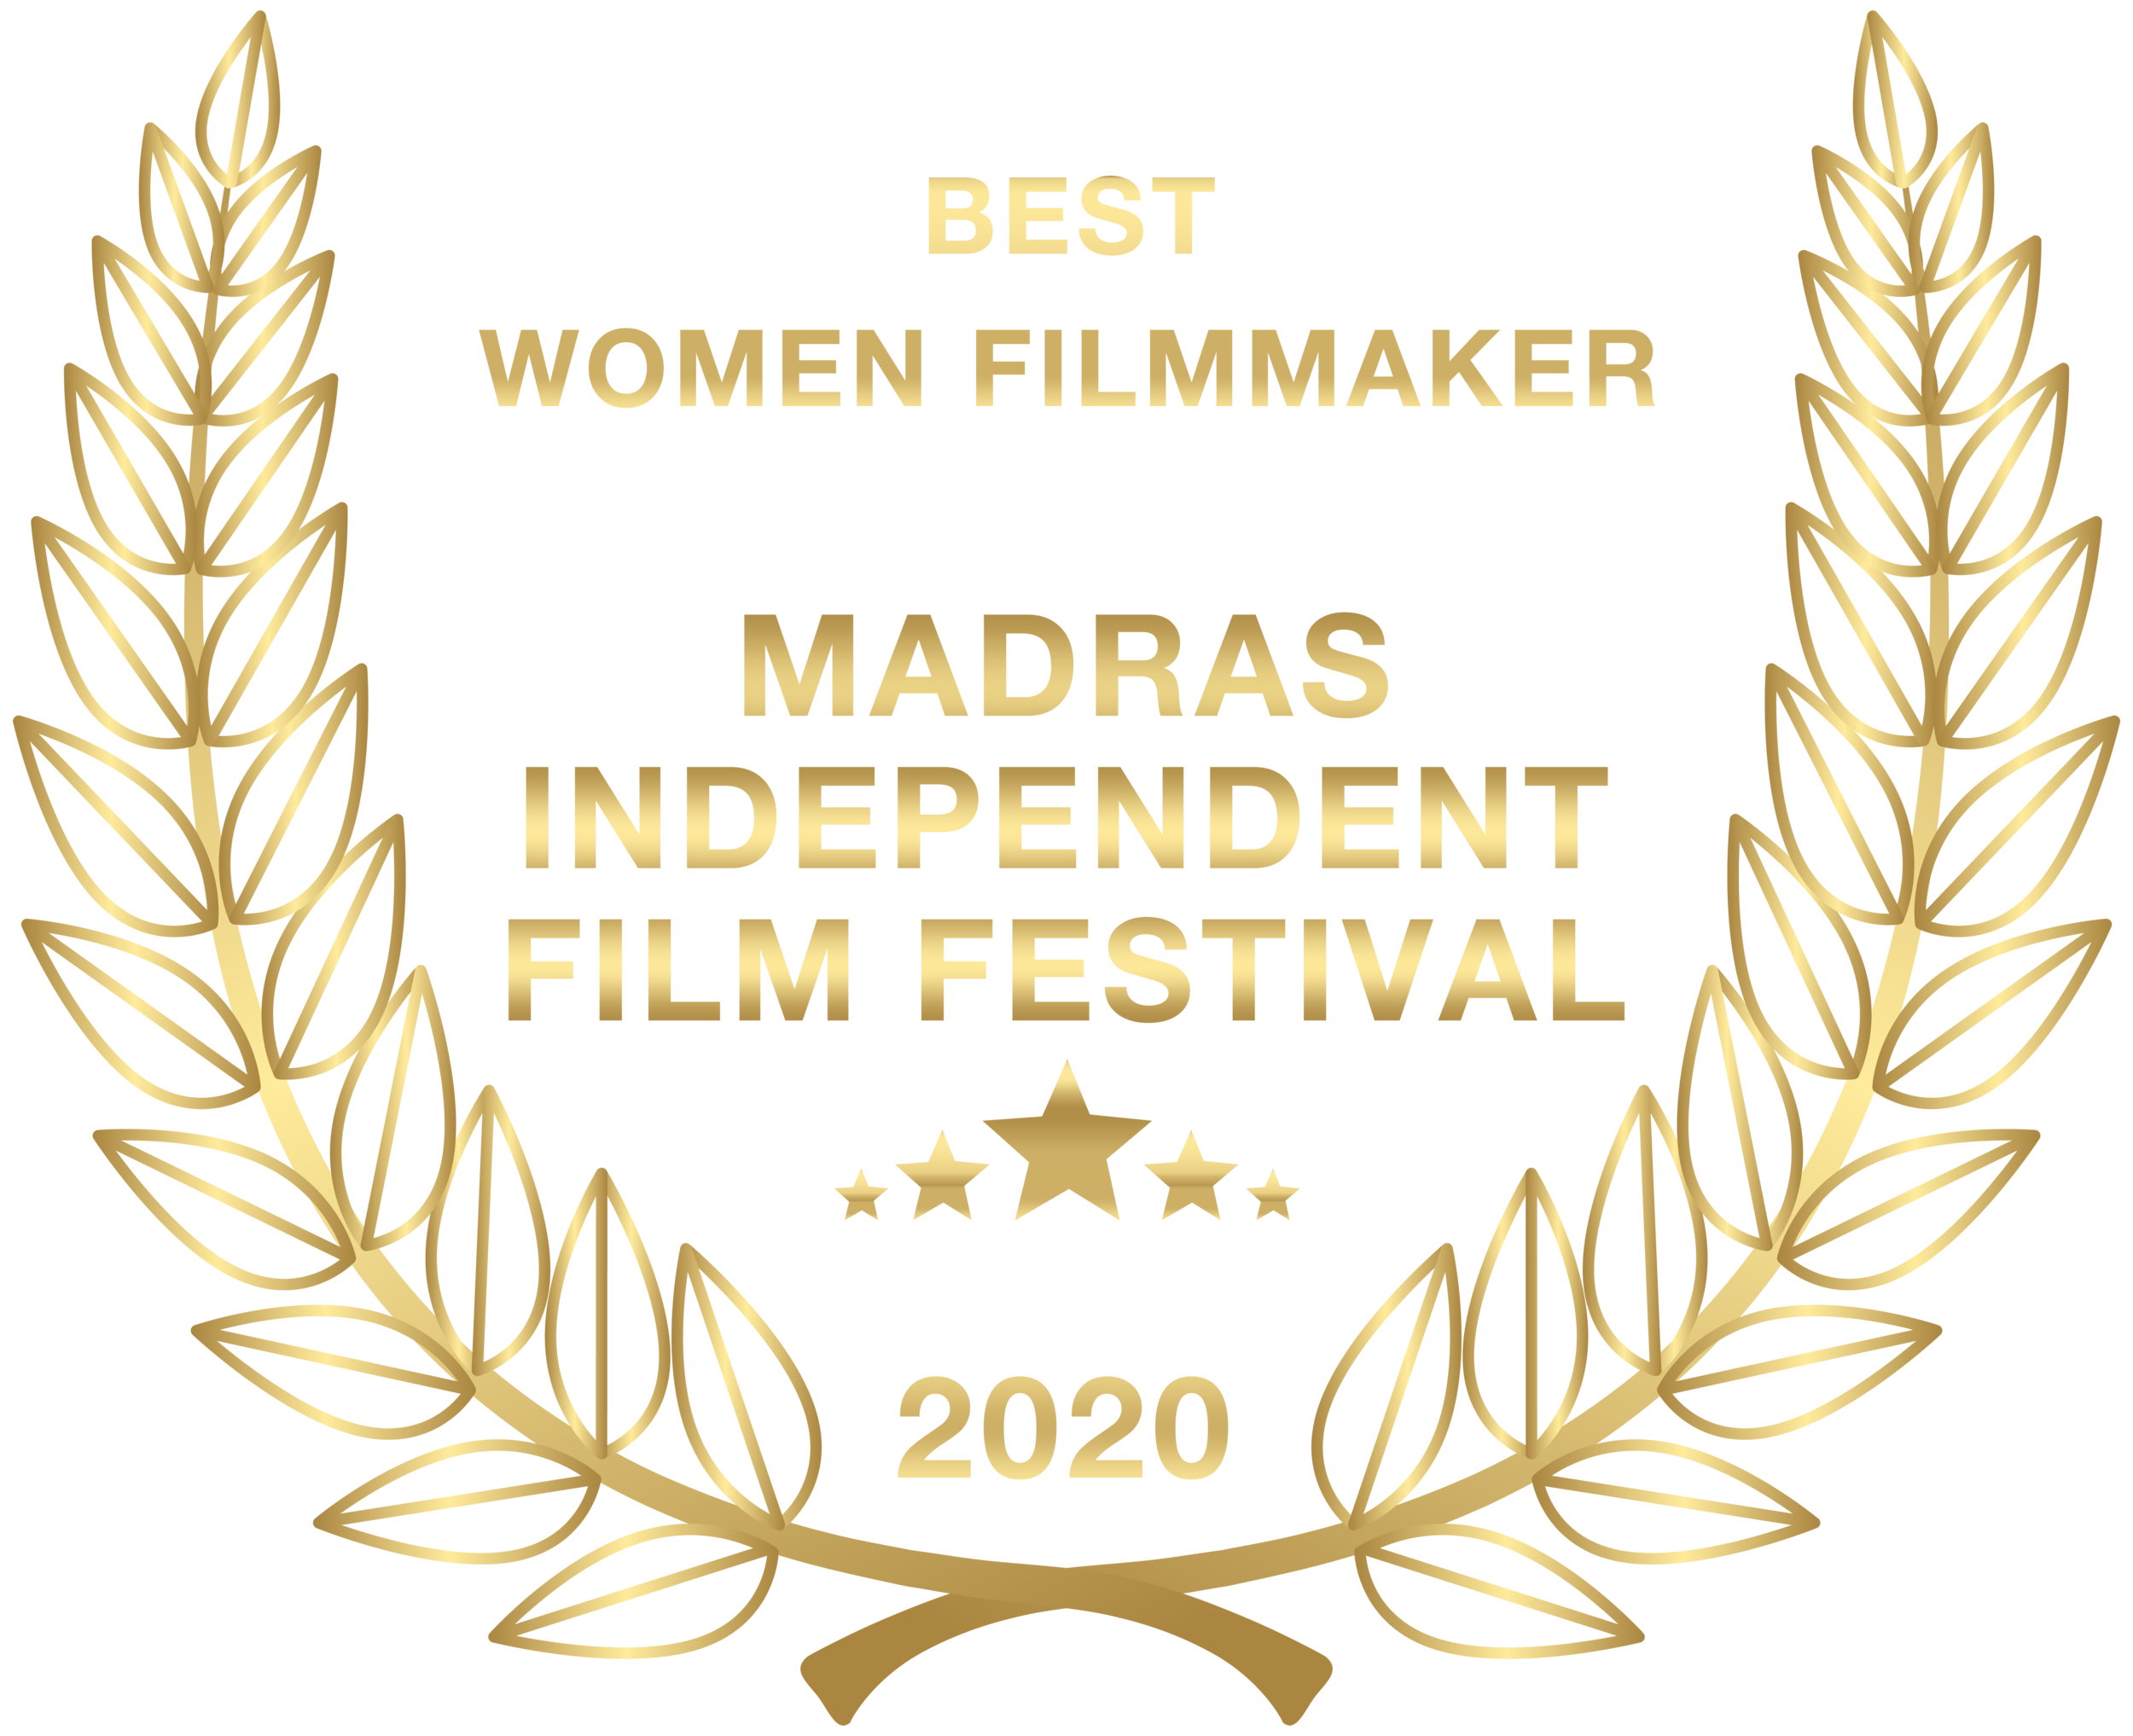 Madras Independent Film Festival BEST WOMEN FILMMAKER.png